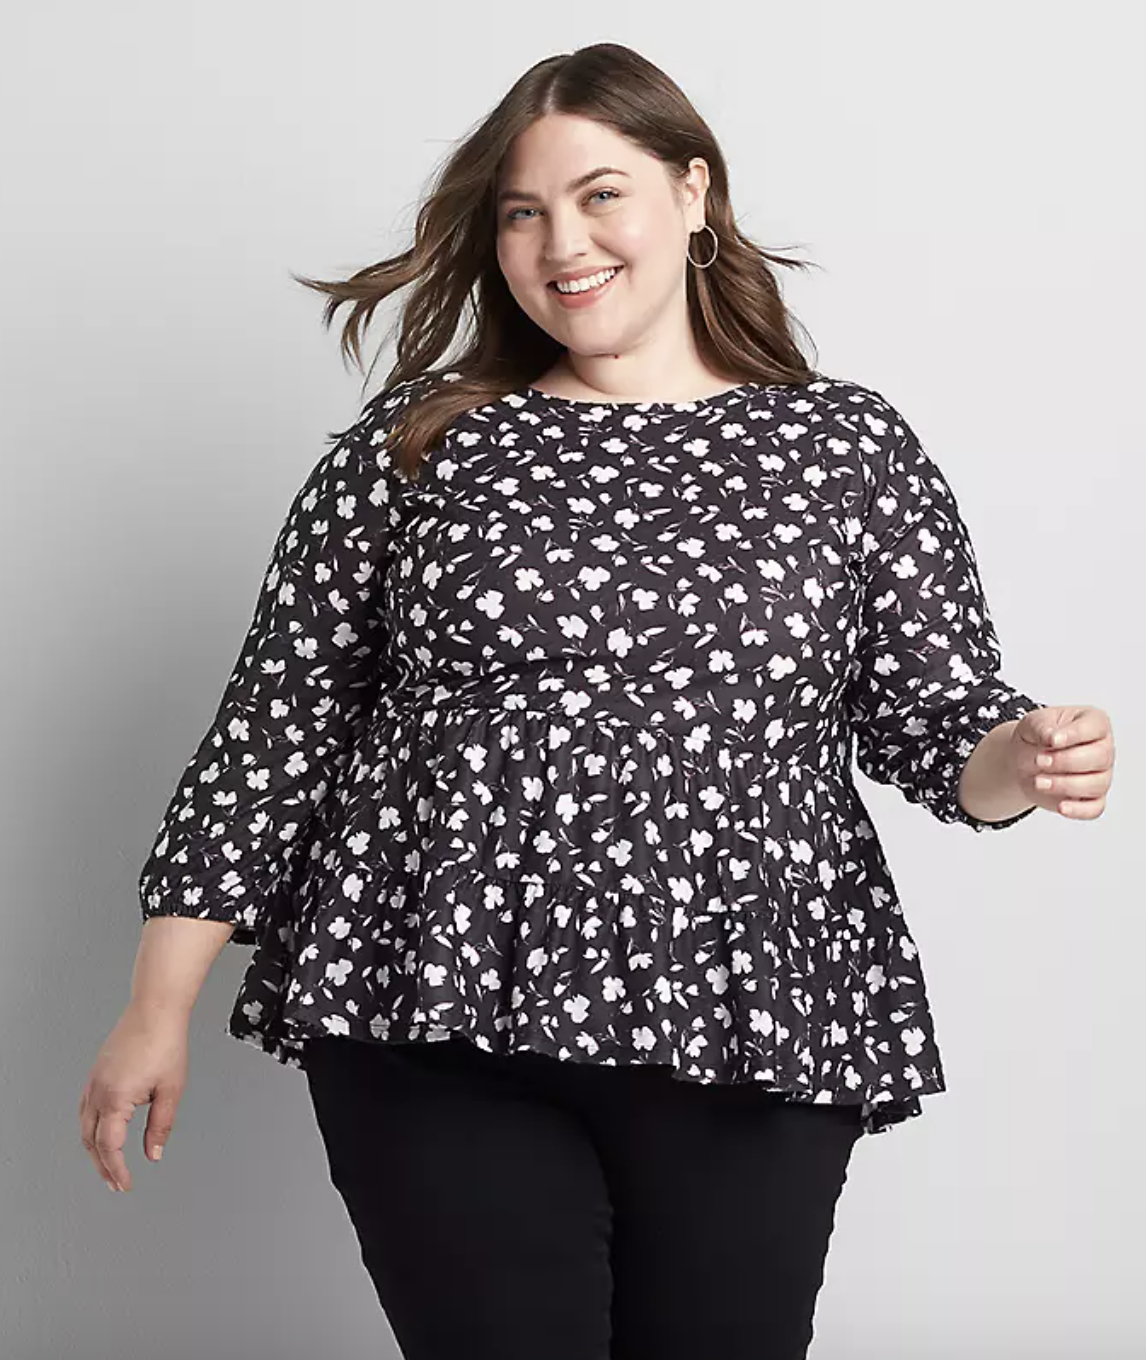 Miuye Womens Tops Loose Floral Print Blouse Summer T-Shirt Plus Size Tunic Shirt Sweatshirt 